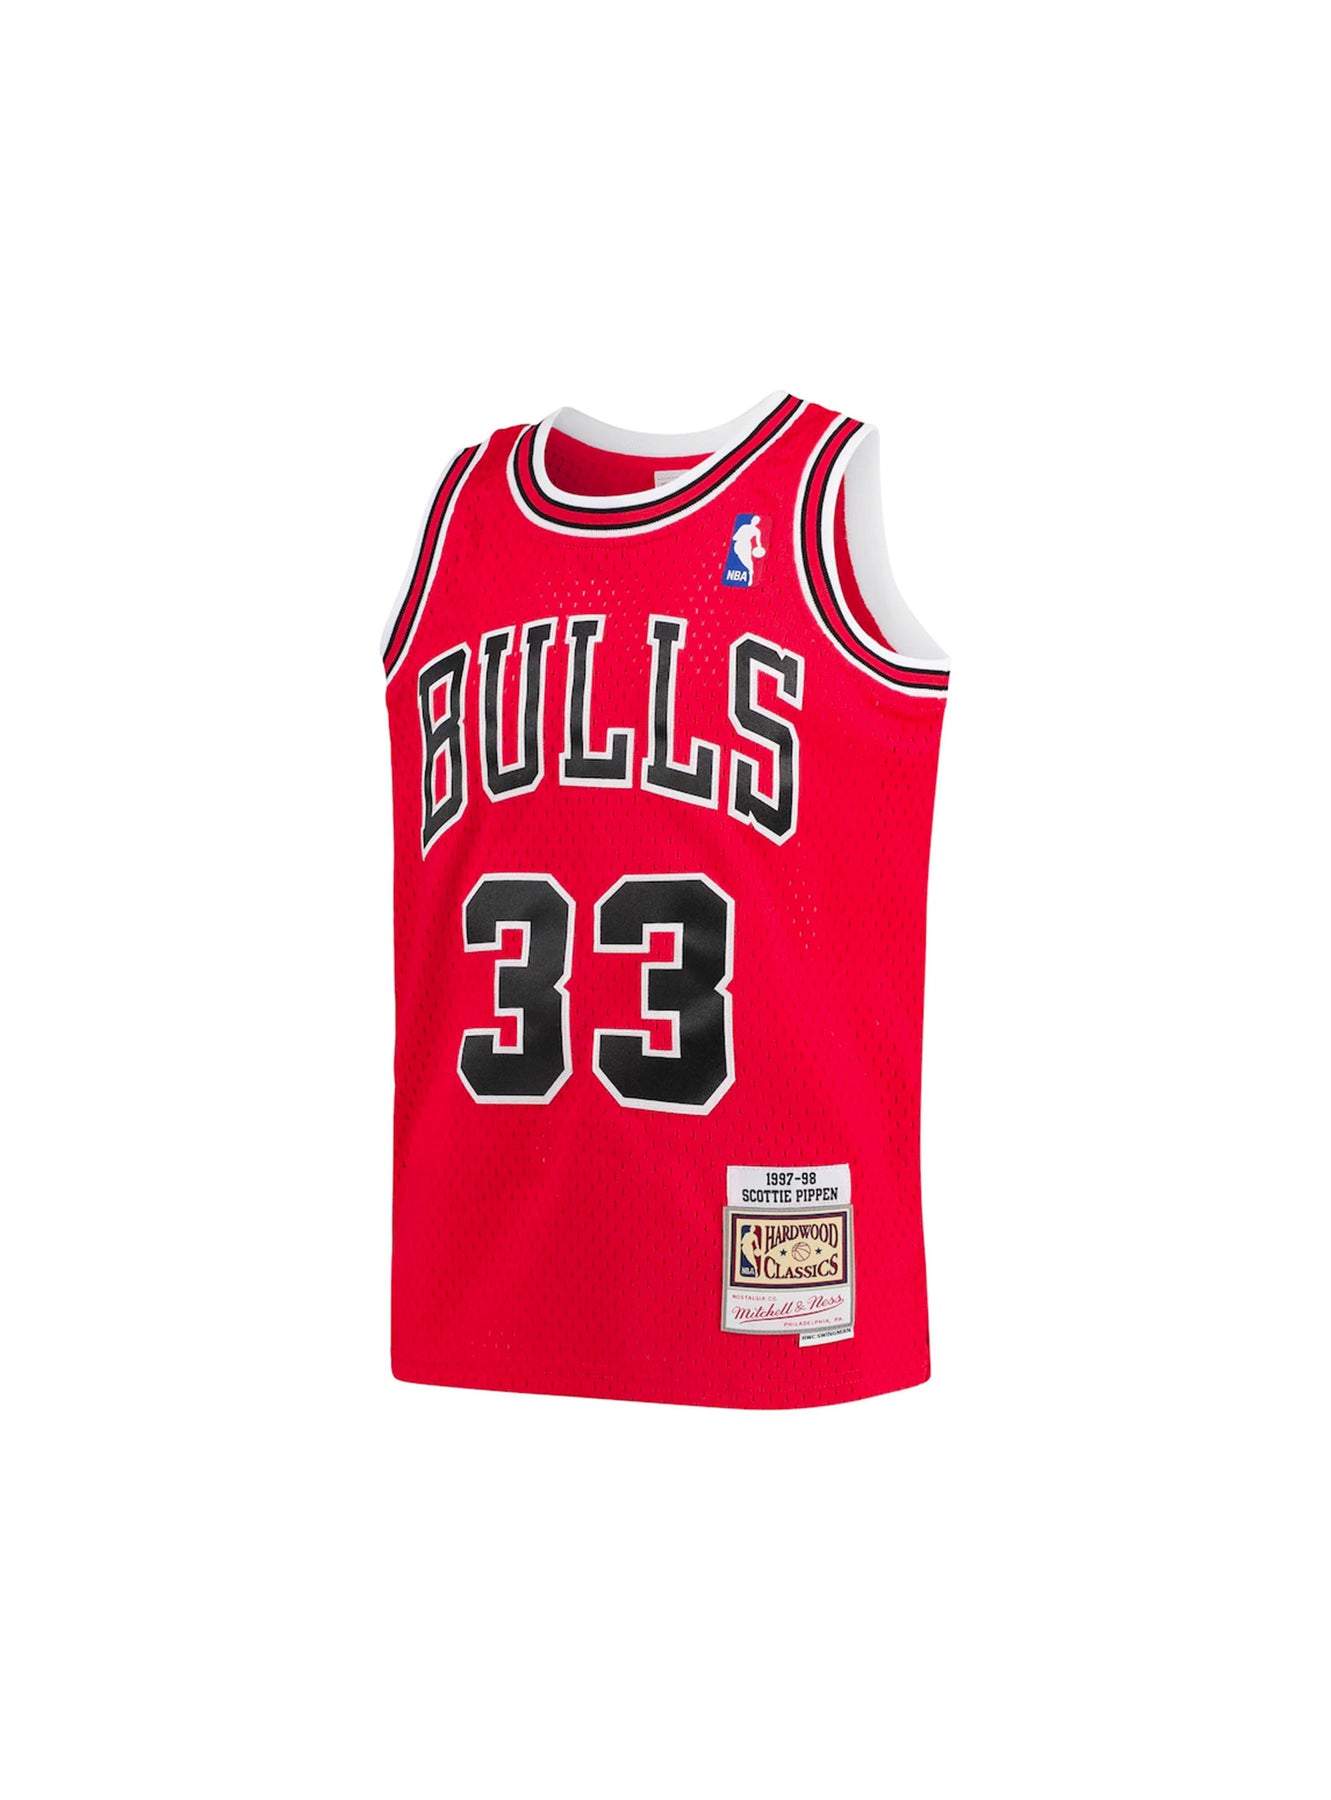 Scottie Pippen Chicago Bulls Hardwood Classics Throwback Jersey